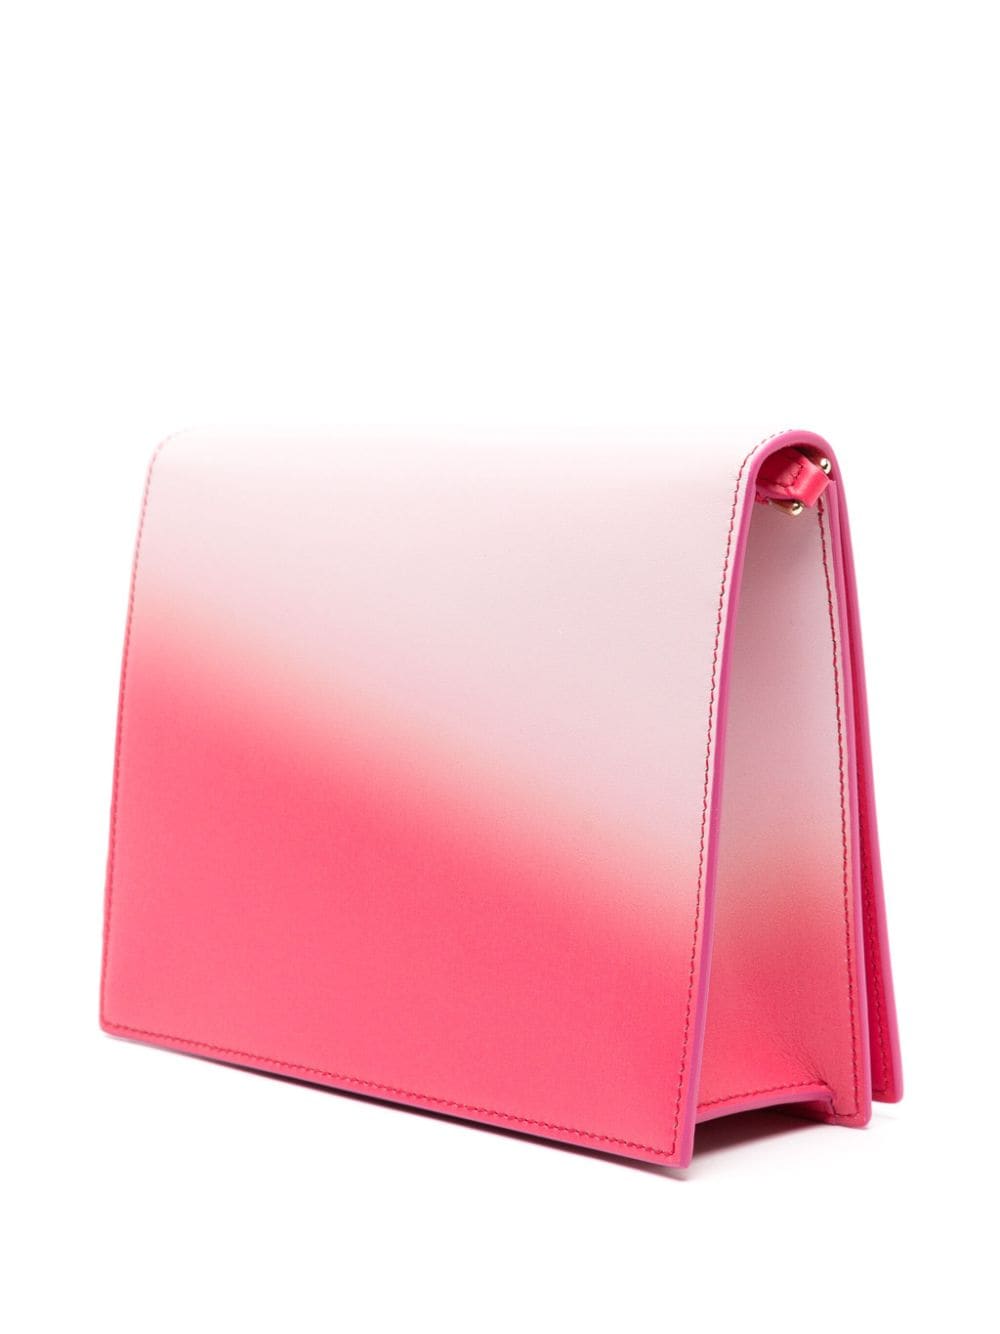 DOLCE & GABBANA Luxurious Pouch Handbag in HF5AC for Women